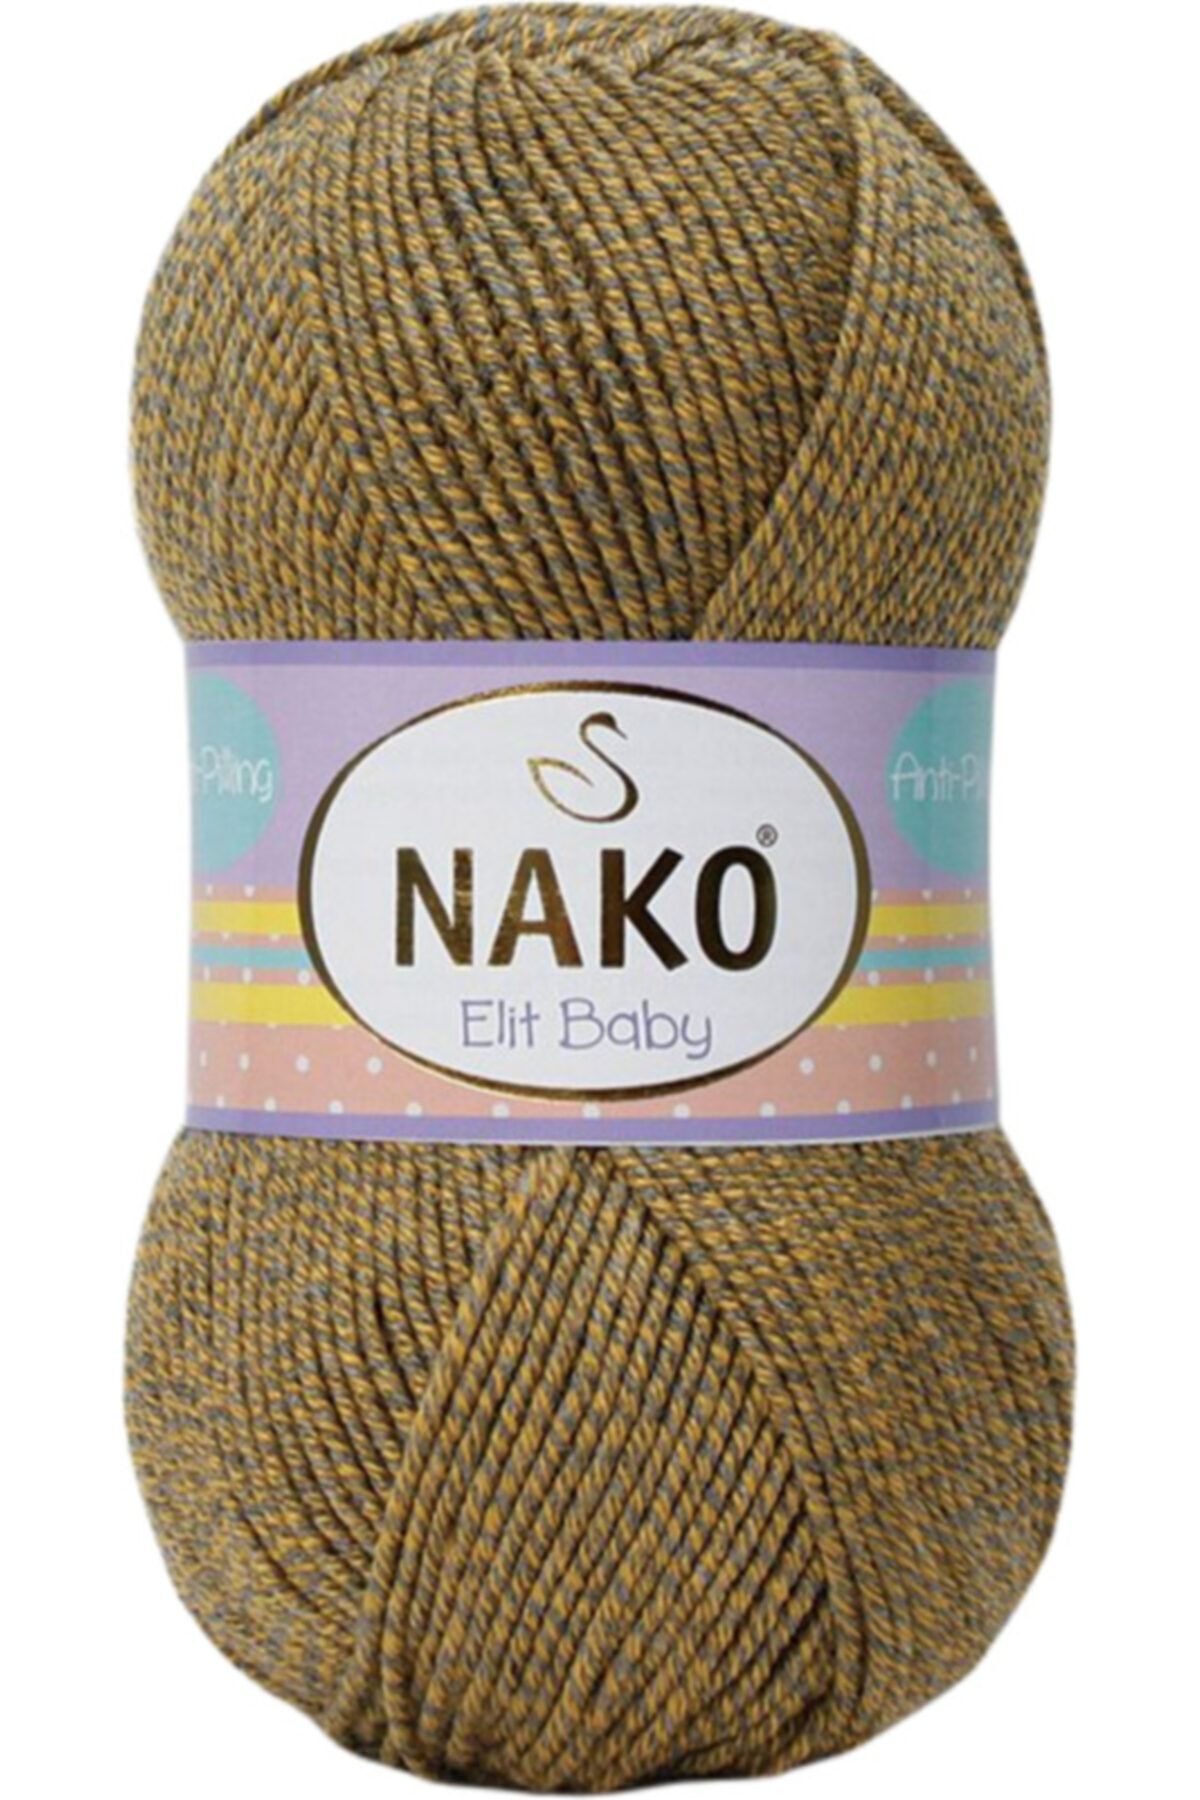 Nako Elit Baby (anti-pilling) El Örgü Ipi Ipliği Yünü Renk Kodu:21354 Sarı-gri Muline